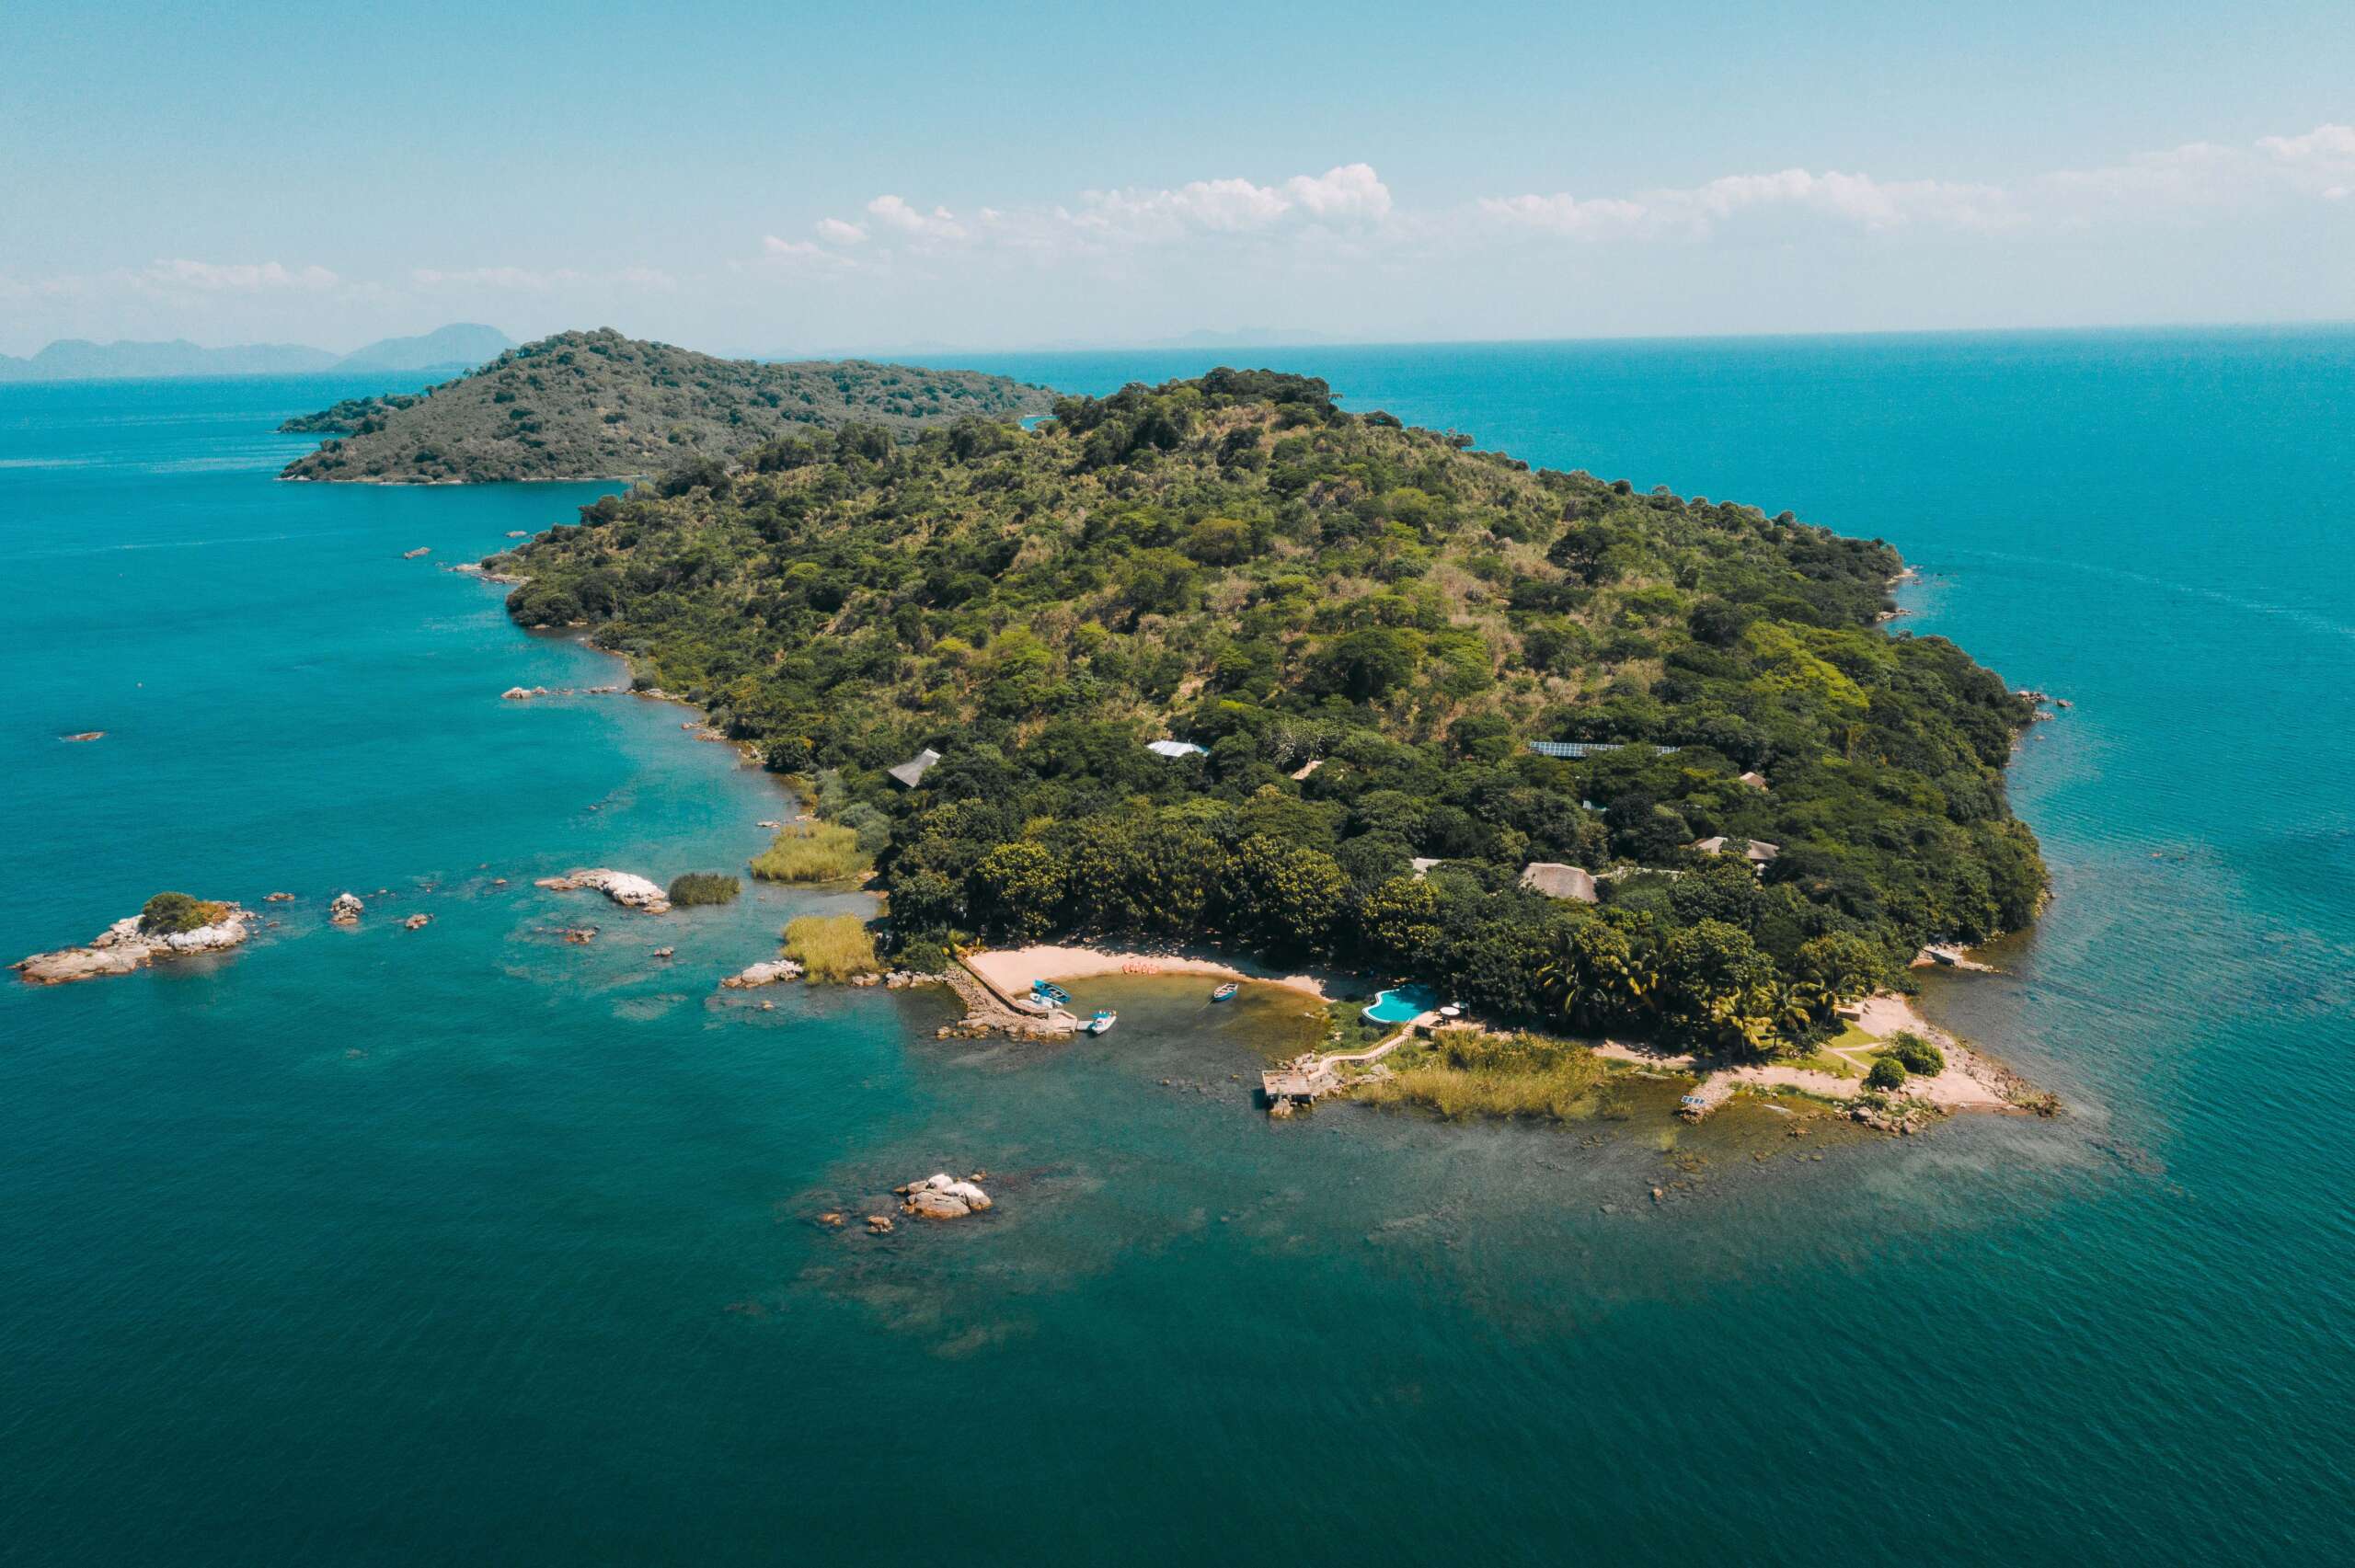 https://visitmalawi.mw/wp-content/uploads/2022/01/Lake-Malawi-Blue-Zebra-nankoma-island-scaled.jpg